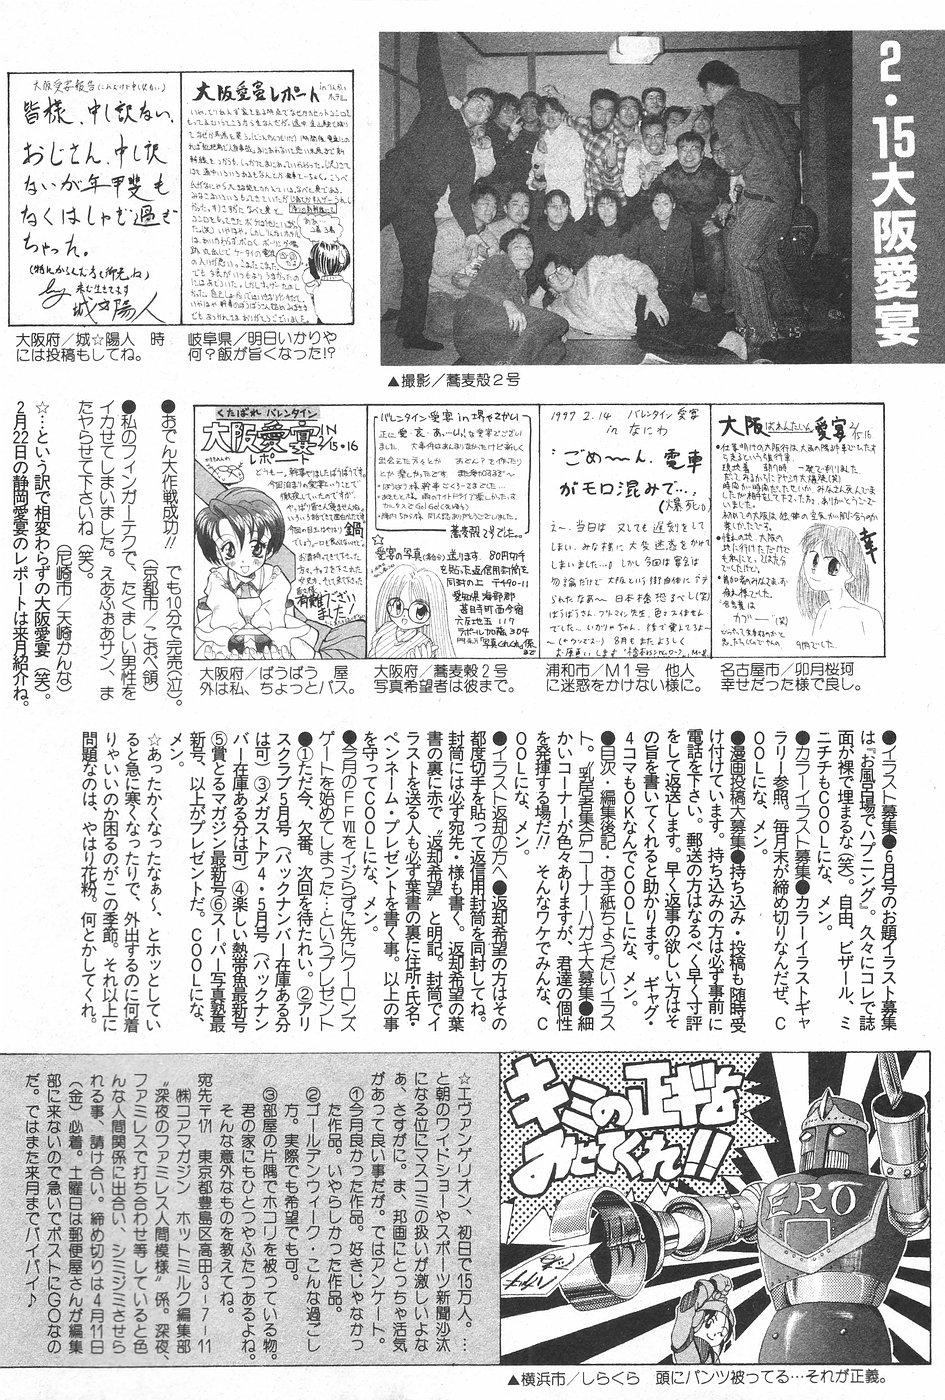 Manga Hotmilk 1997-05 179